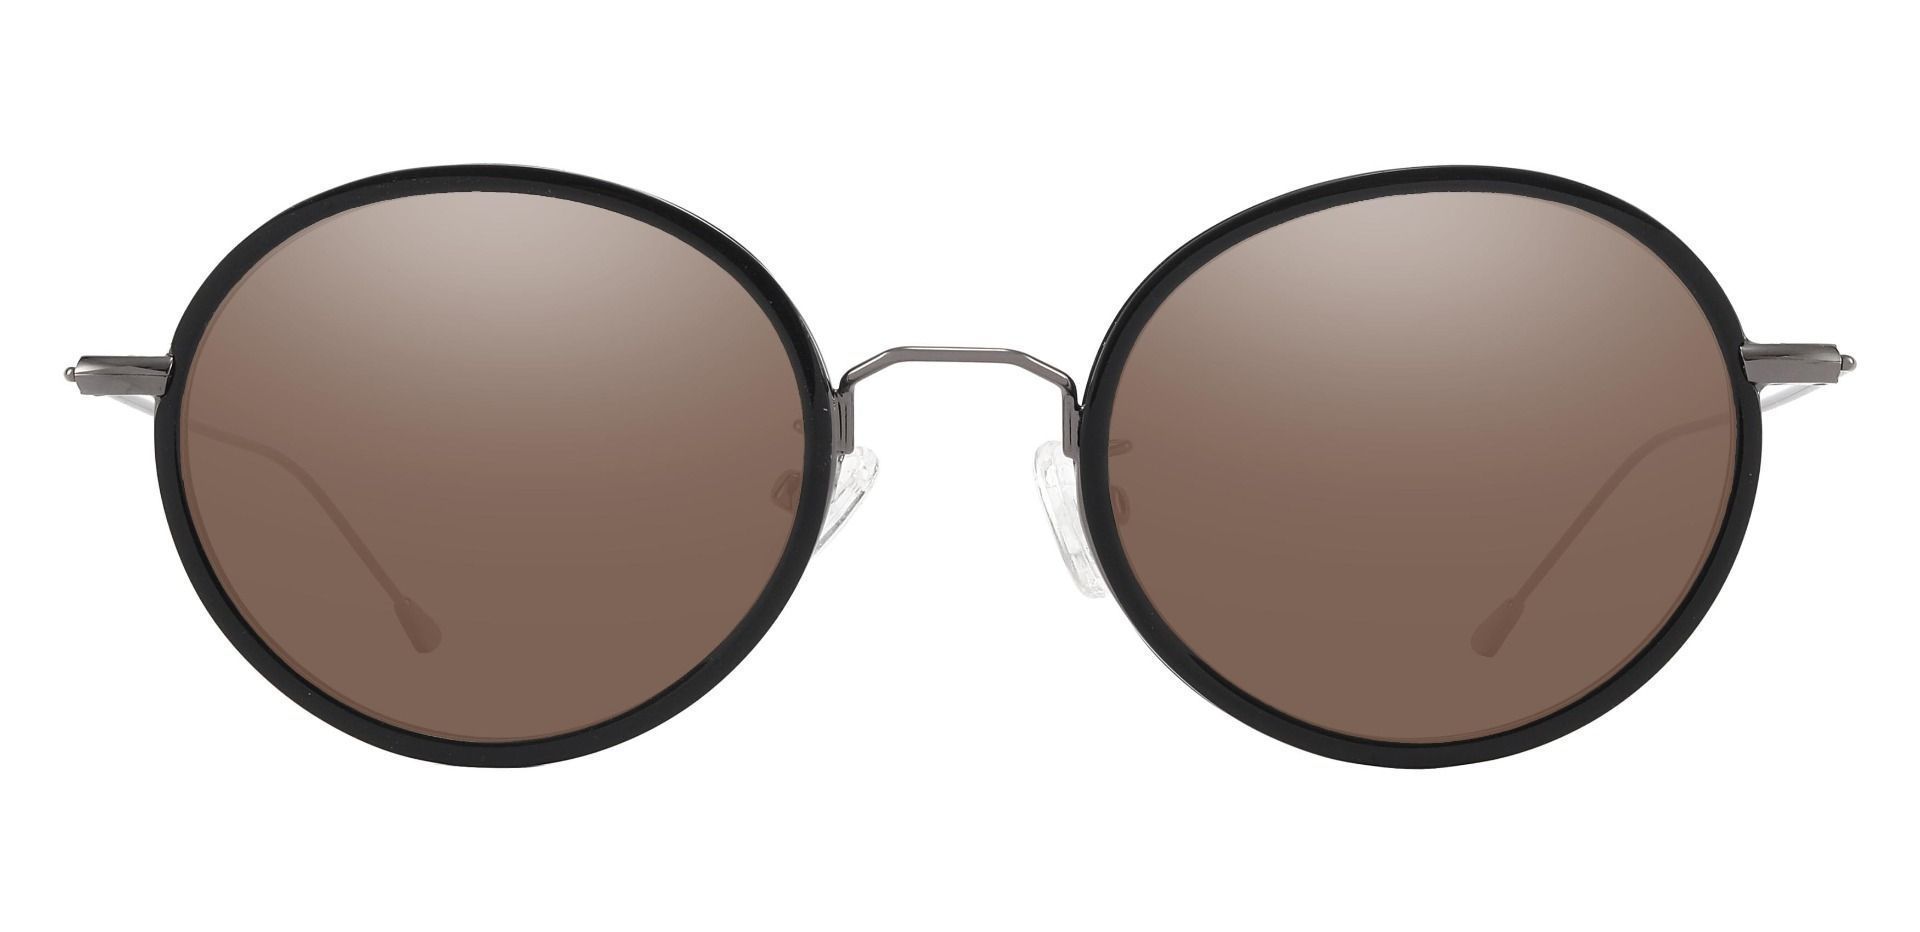 Malverne Oval Progressive Sunglasses - Black Frame With Brown Lenses